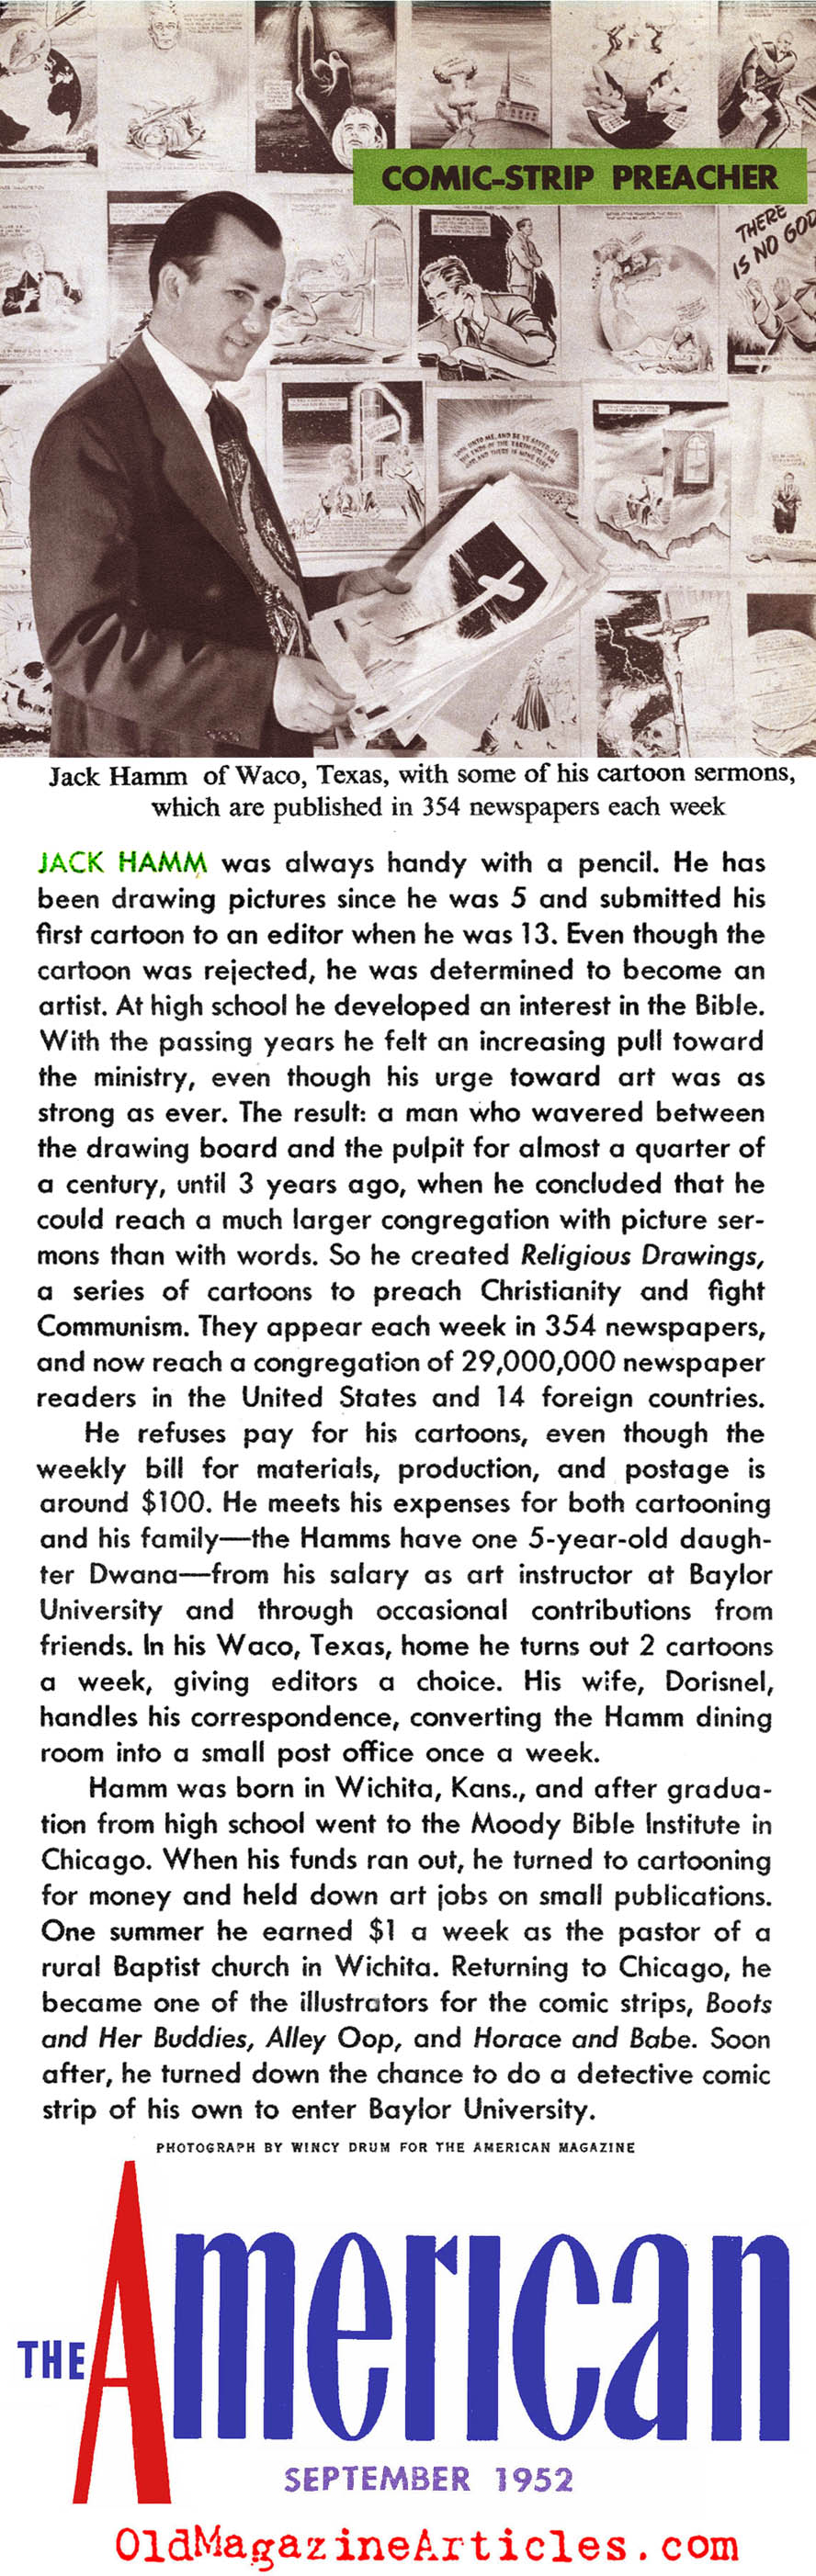 Jack Hamm: Cartoon Preacher (The American Magazine, 1952)